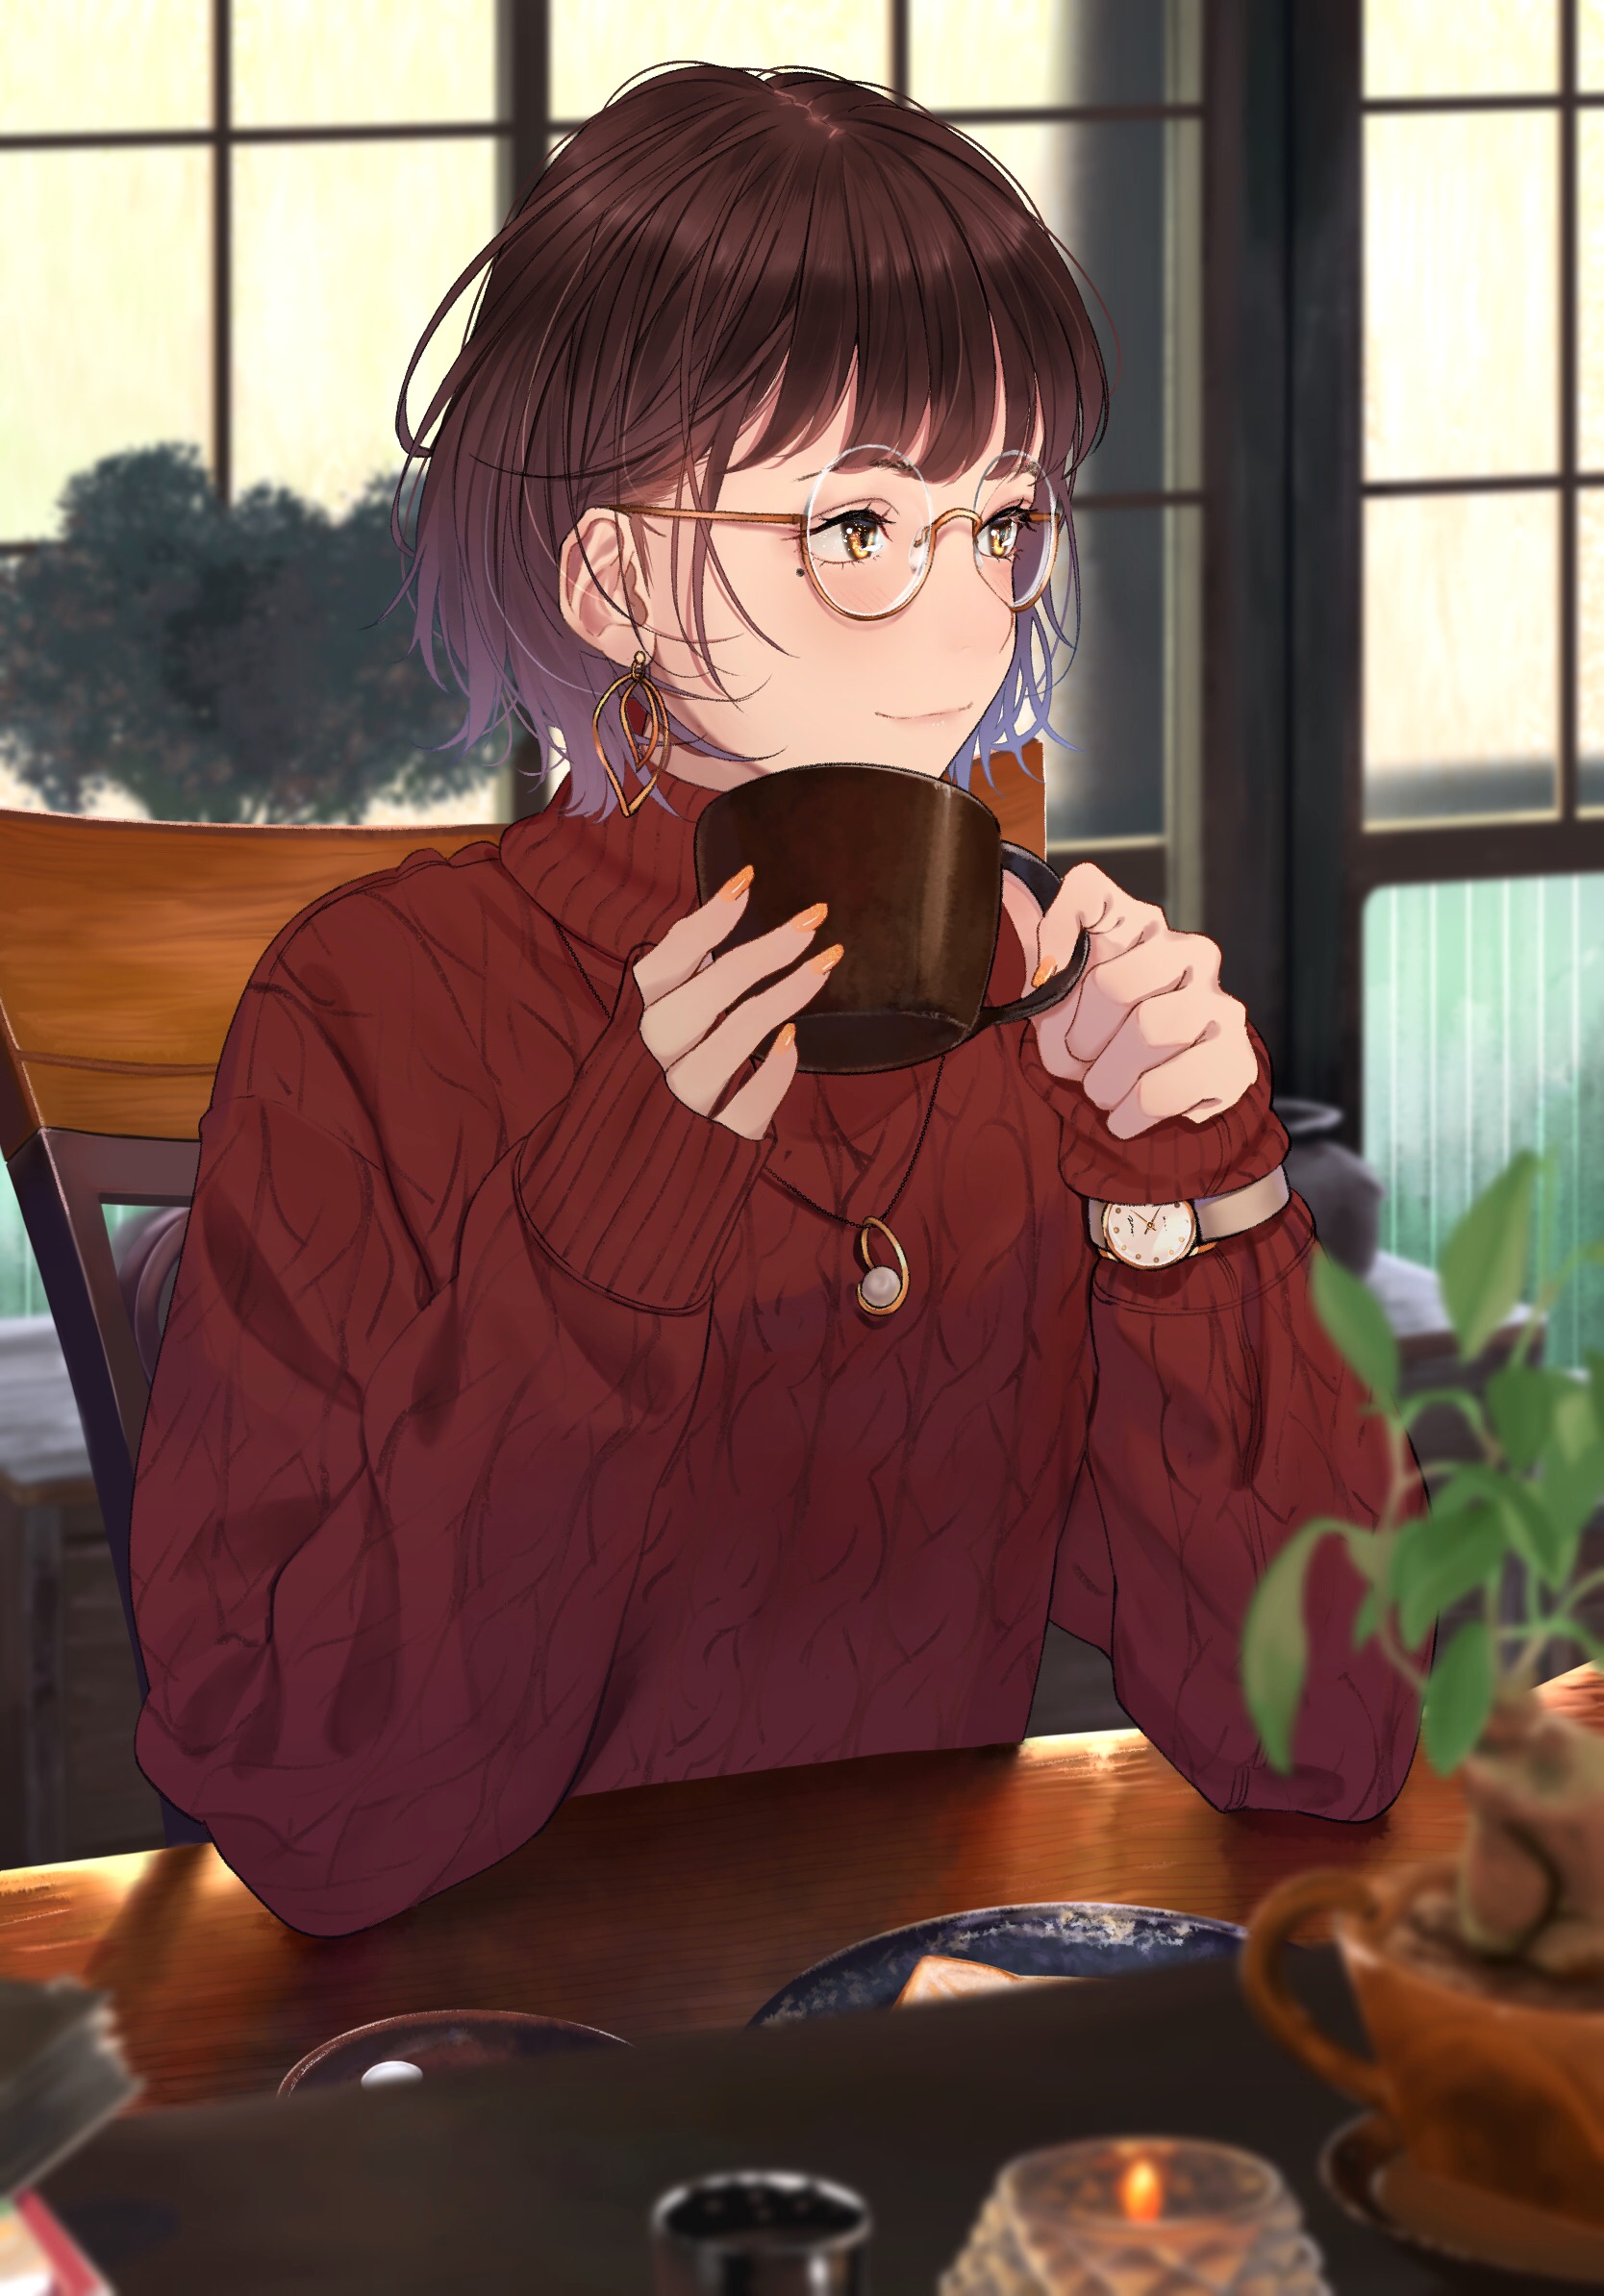 Anime 1668x2388 anime girls portrait display original characters Saitou brunette short hair brown eyes glasses sweater cup meganekko red sweater 2D